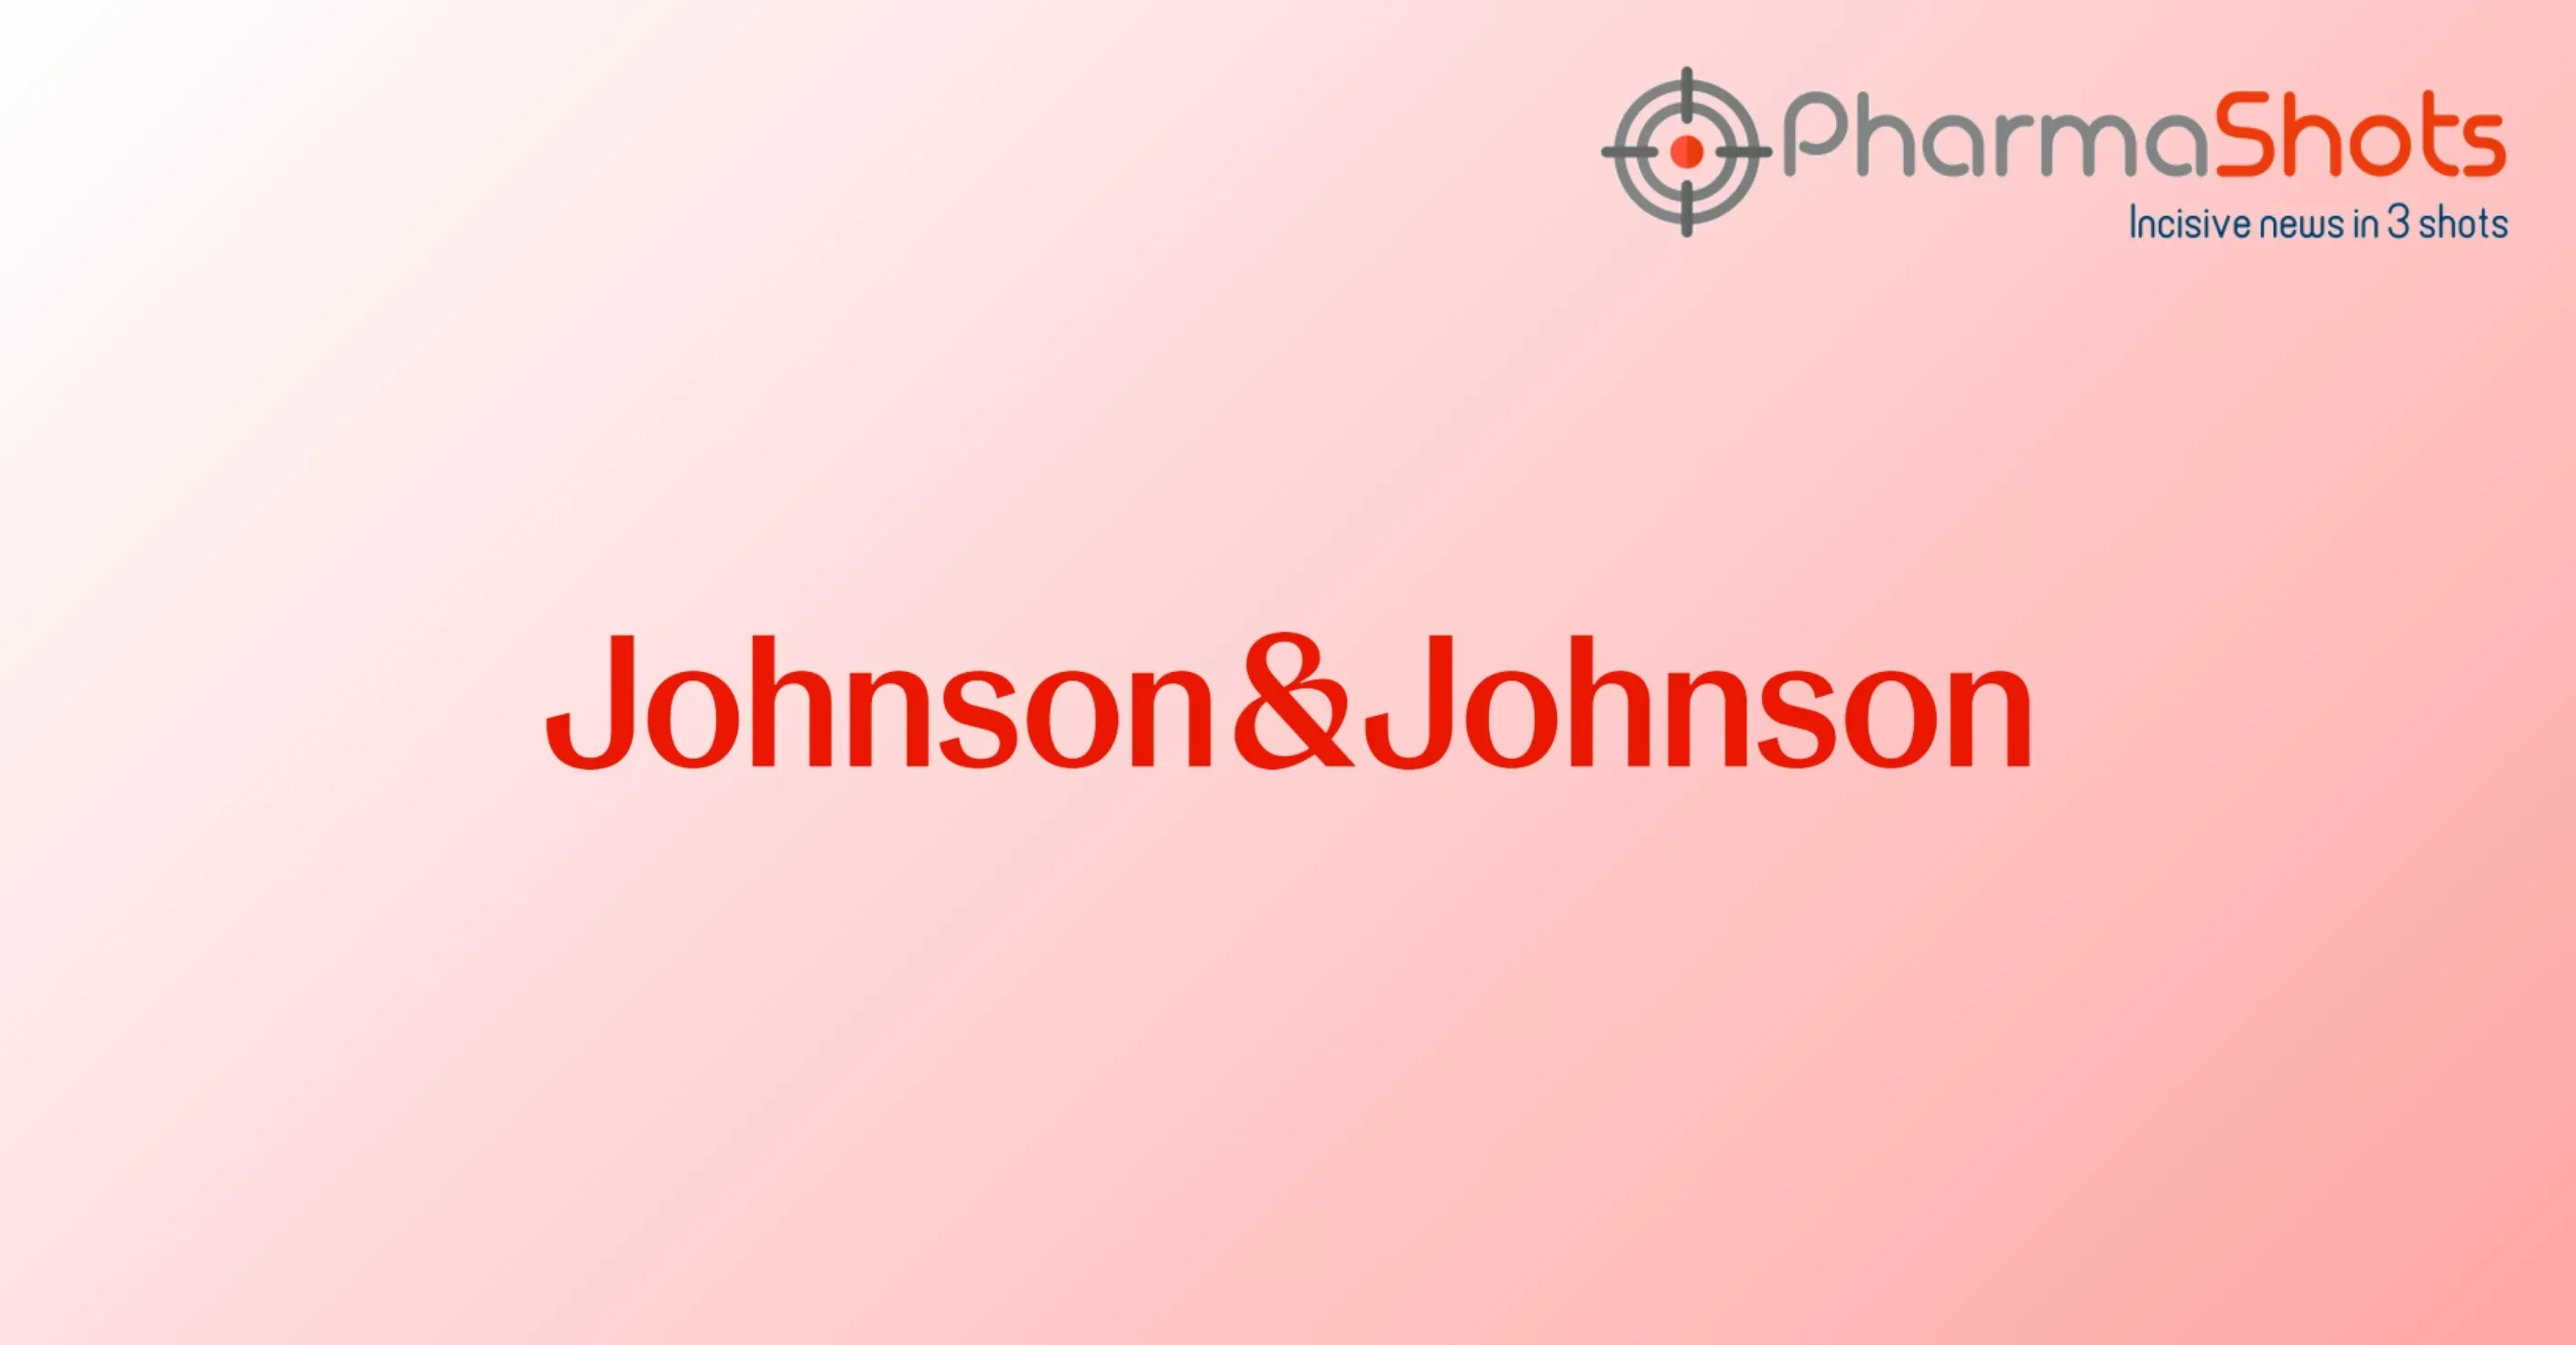 Johnson & Johnson’s Sirturo Gains the US FDA & EC’s Approval to Treat Pulmonary Tuberculosis